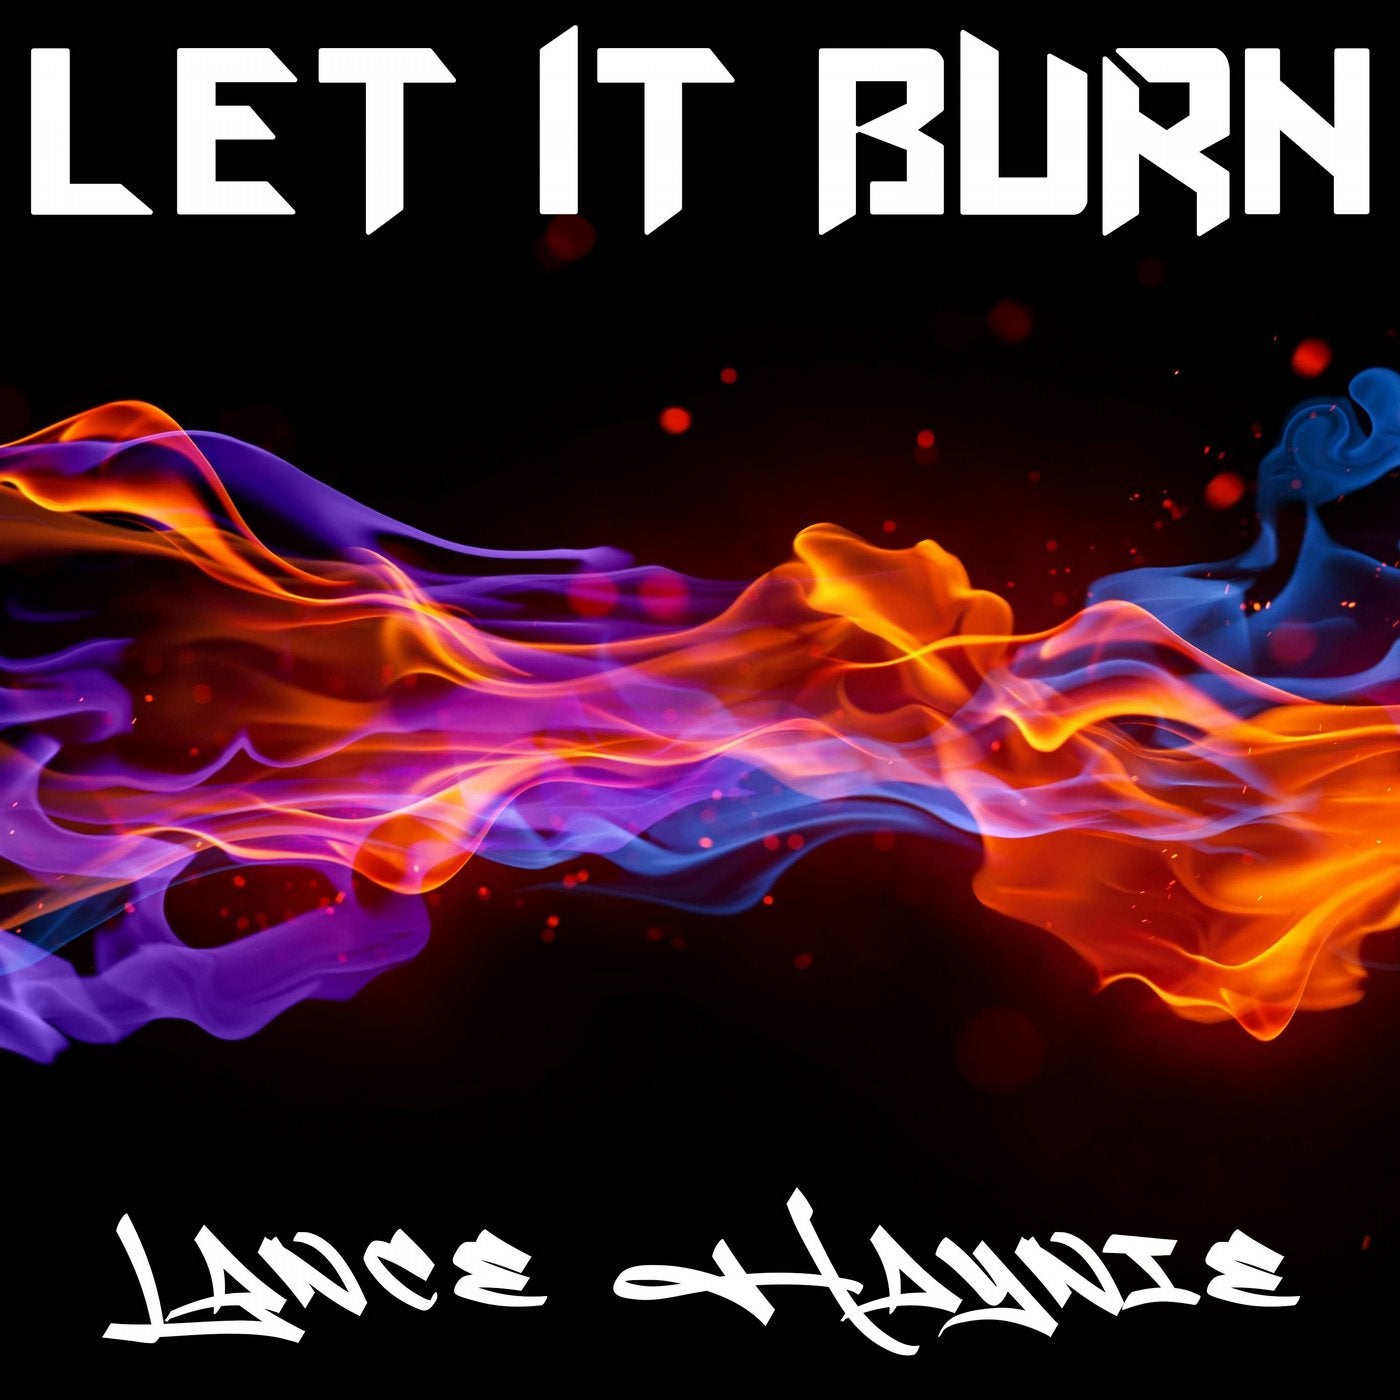 Let It Burn